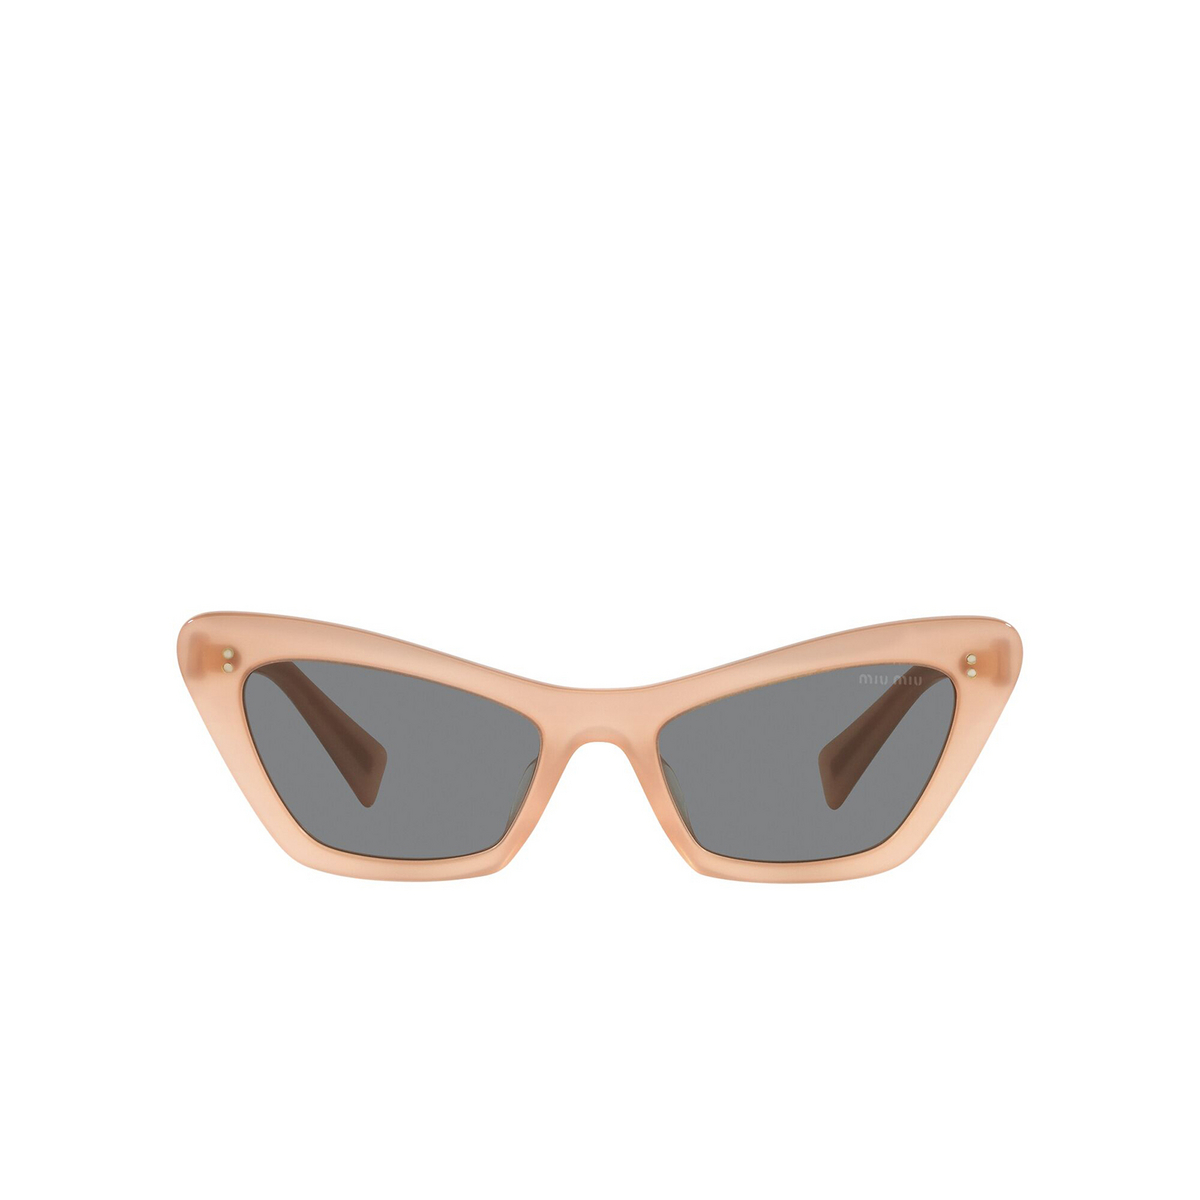 Miu Miu® Cat-eye Sunglasses: MU 03XS color Pink Transparent 02M05H - front view.